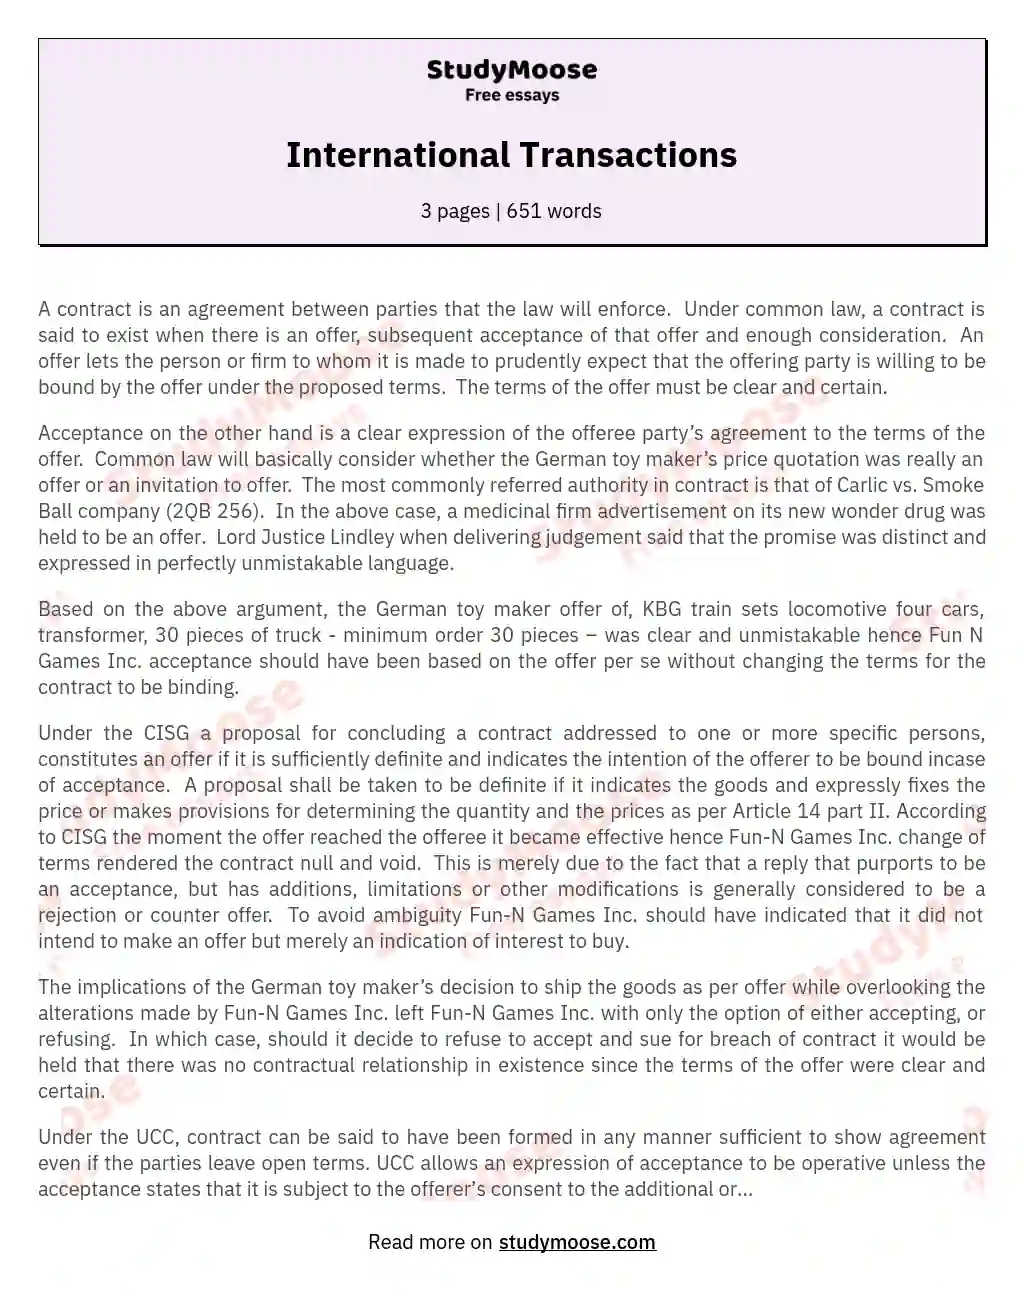 International Transactions essay